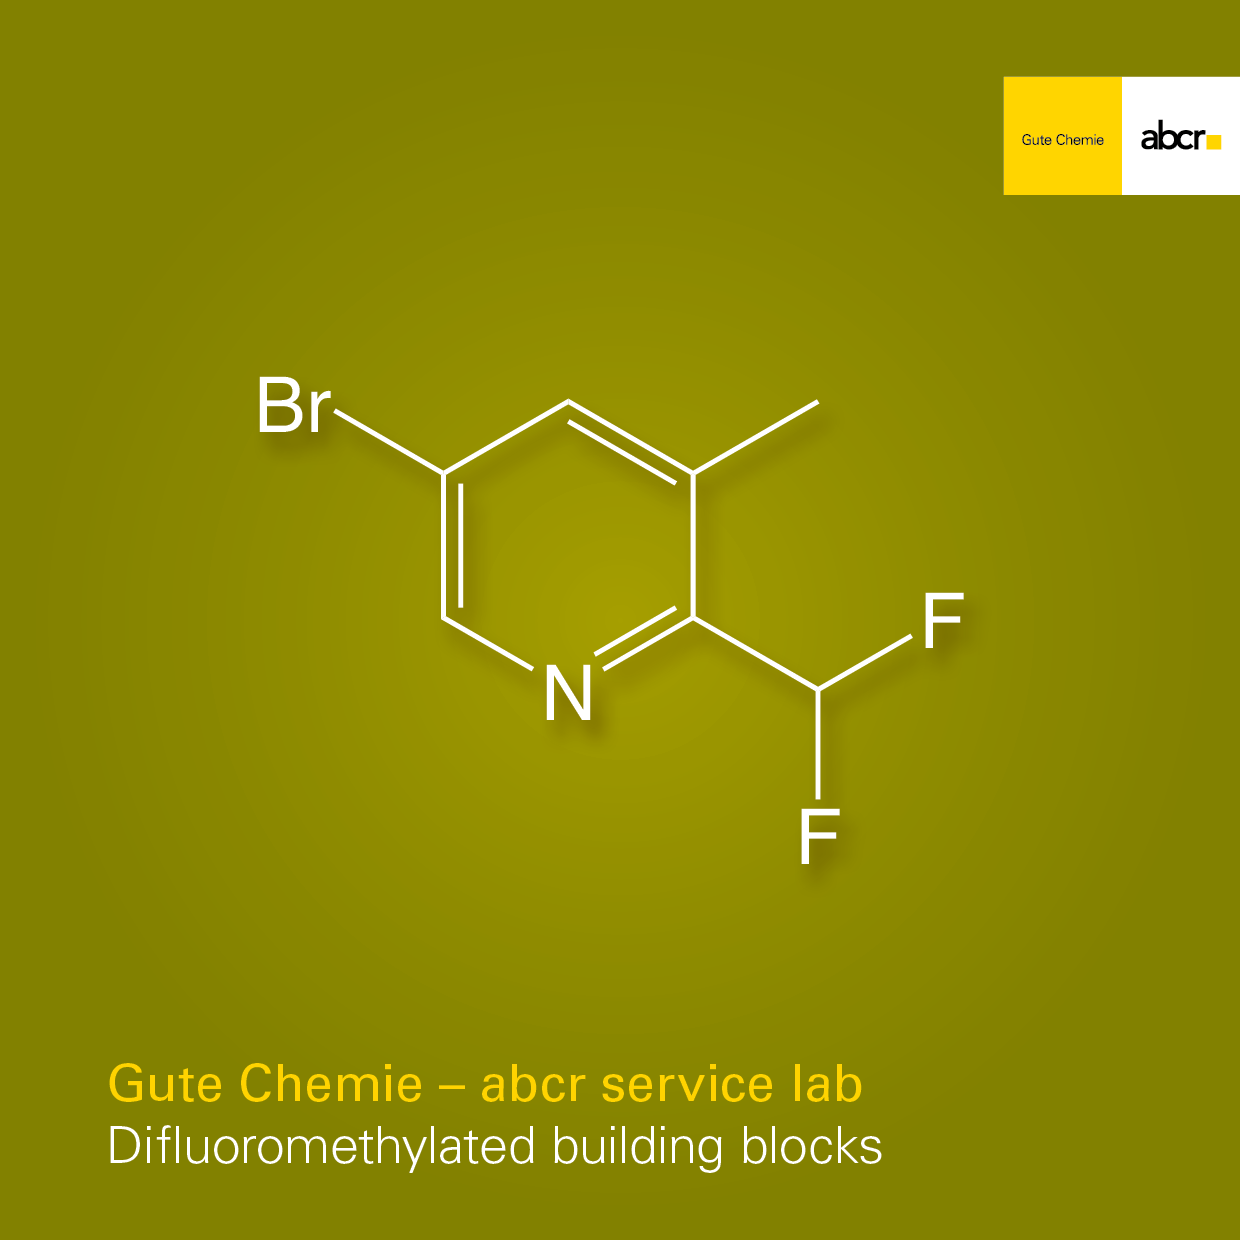 Difluoromethylated building blocks - abcr service lab